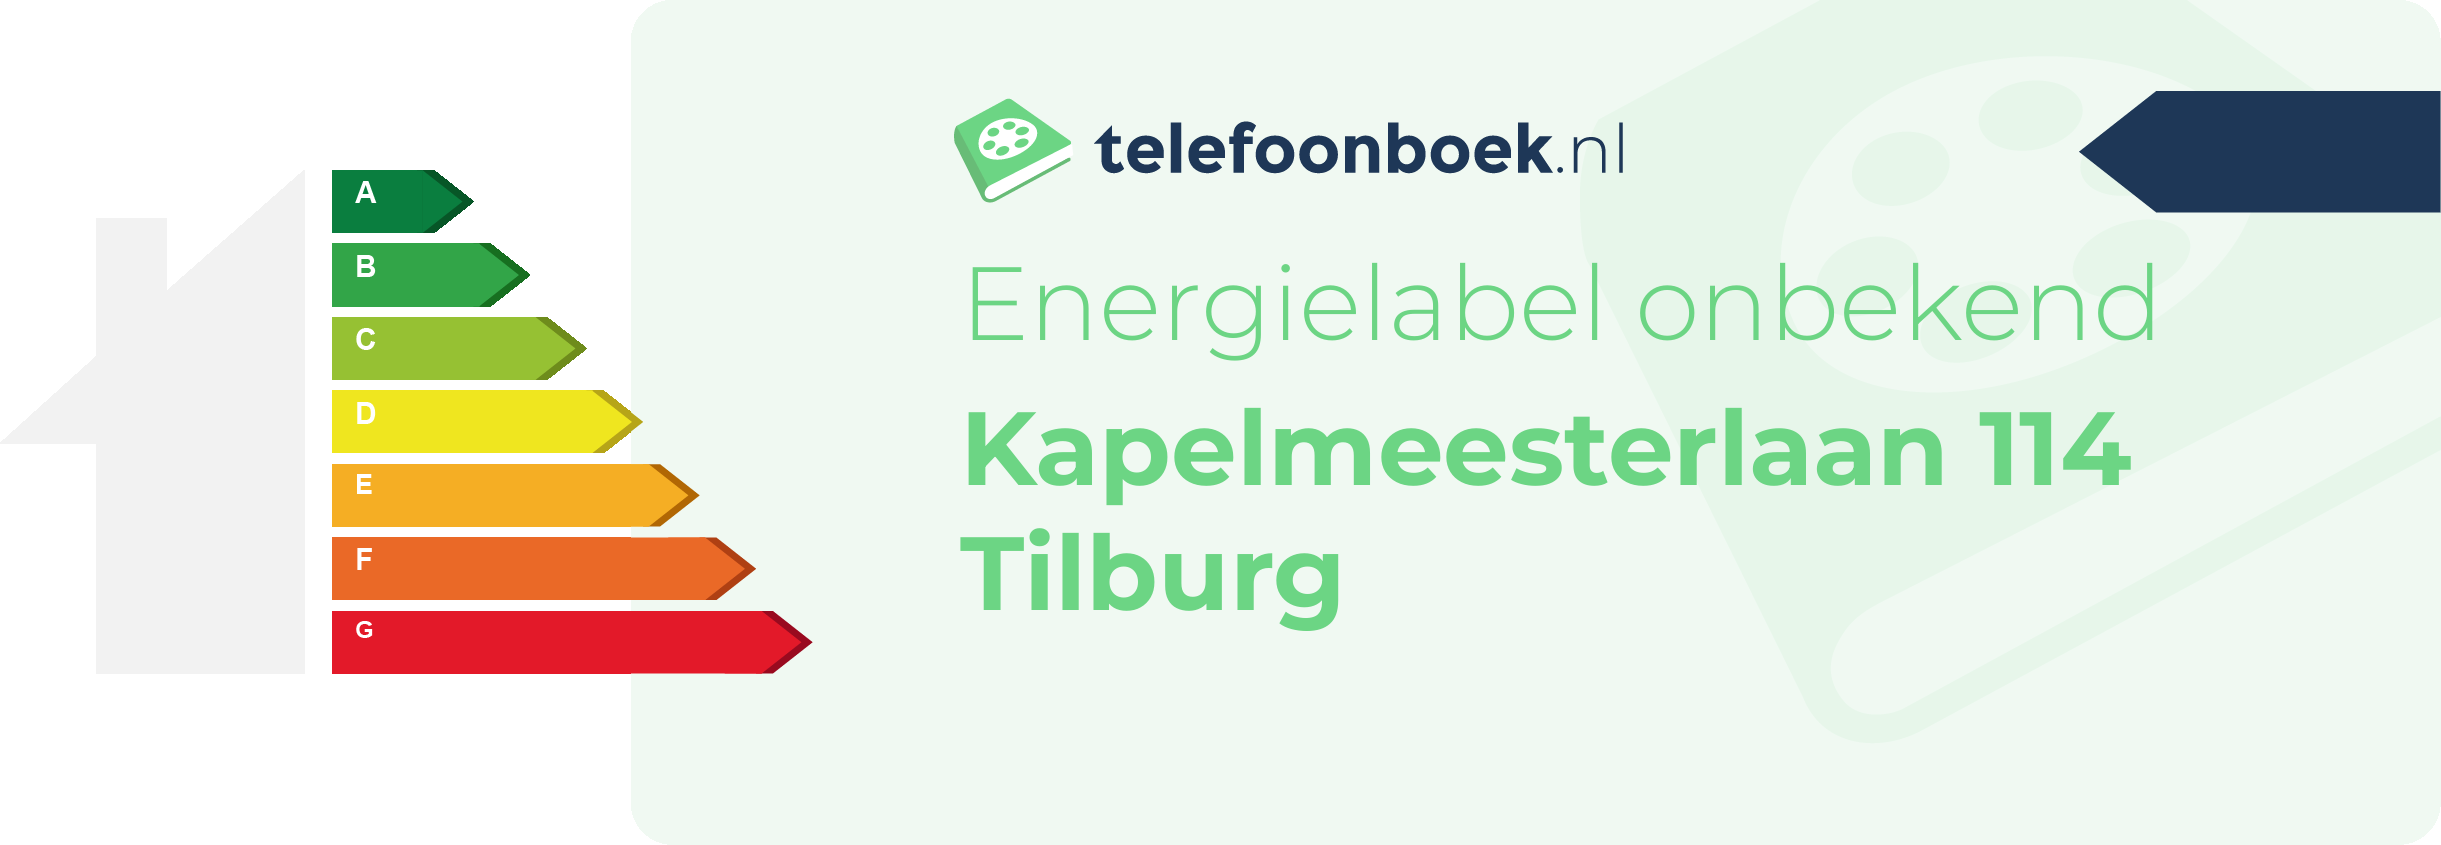 Energielabel Kapelmeesterlaan 114 Tilburg